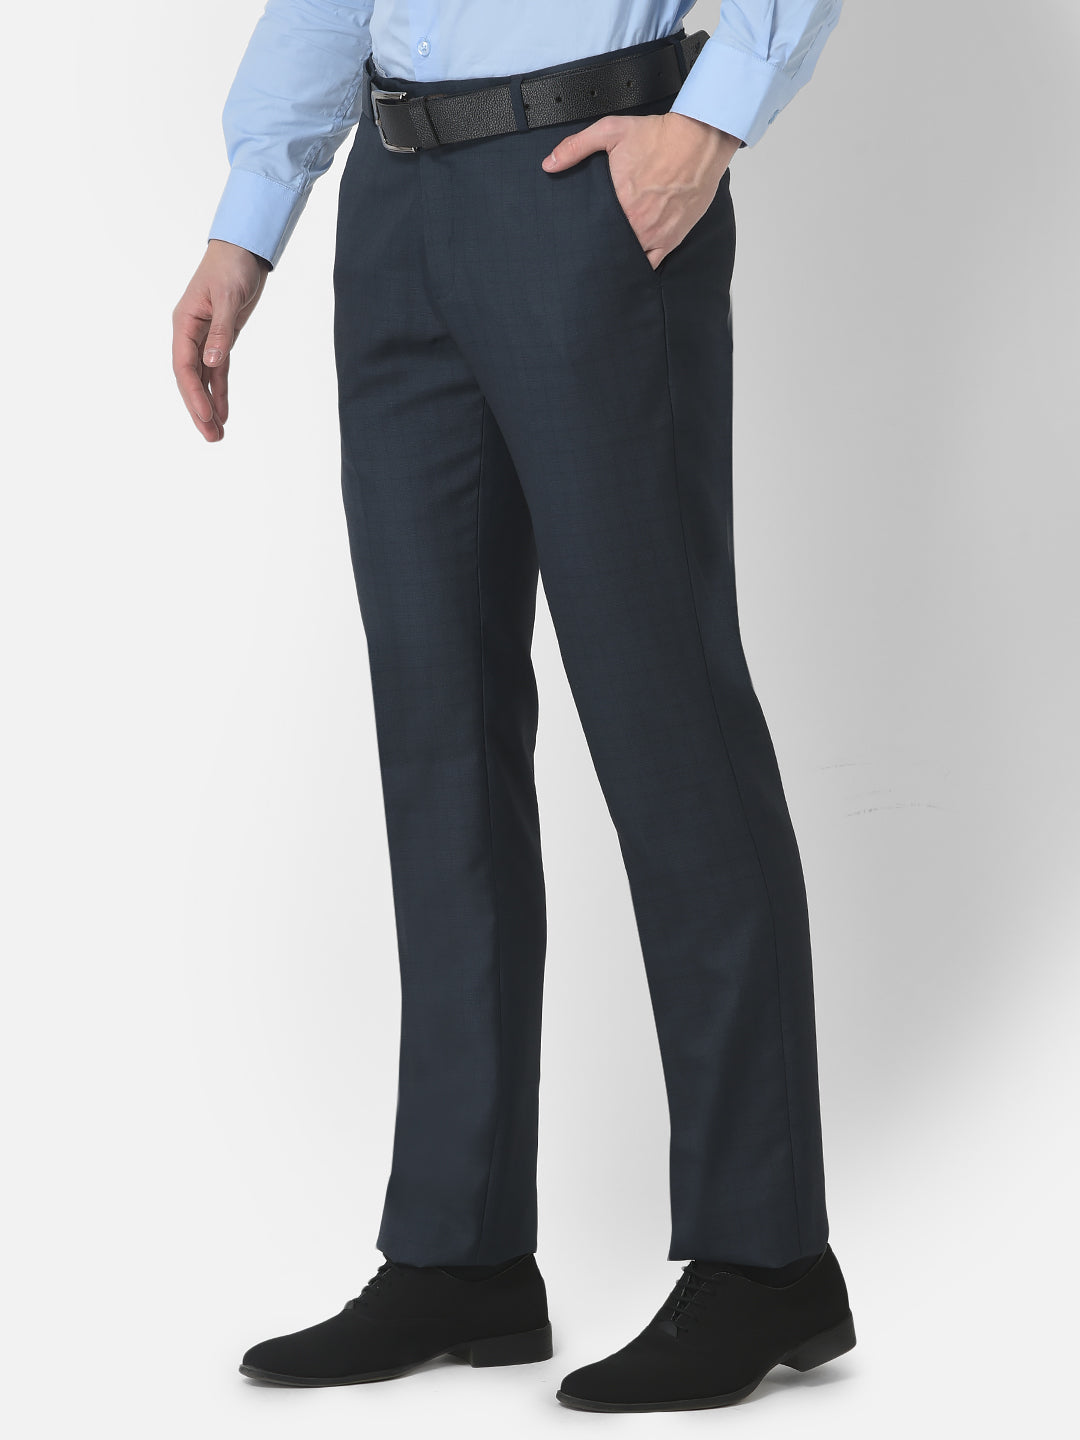 Regular Fit Formal Trousers  Buy Regular Fit Formal Trousers online in  India